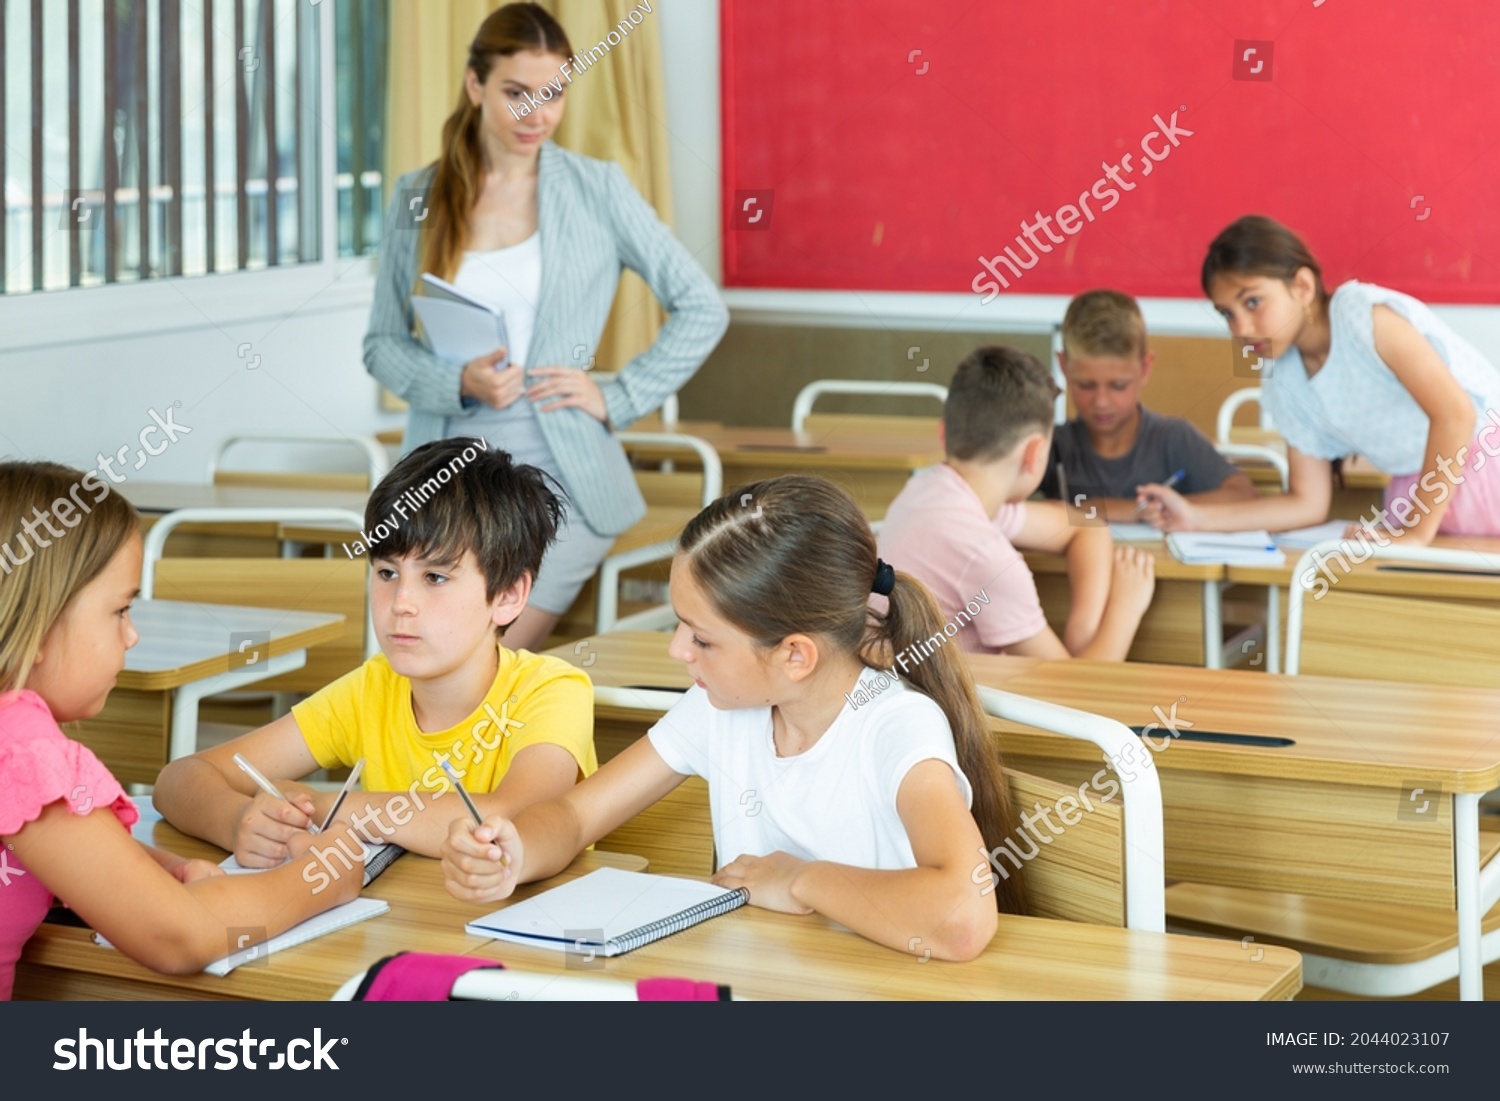 Schoolchildren performing group tasks in classroom. Teacher standing beside and observing. #2044023107